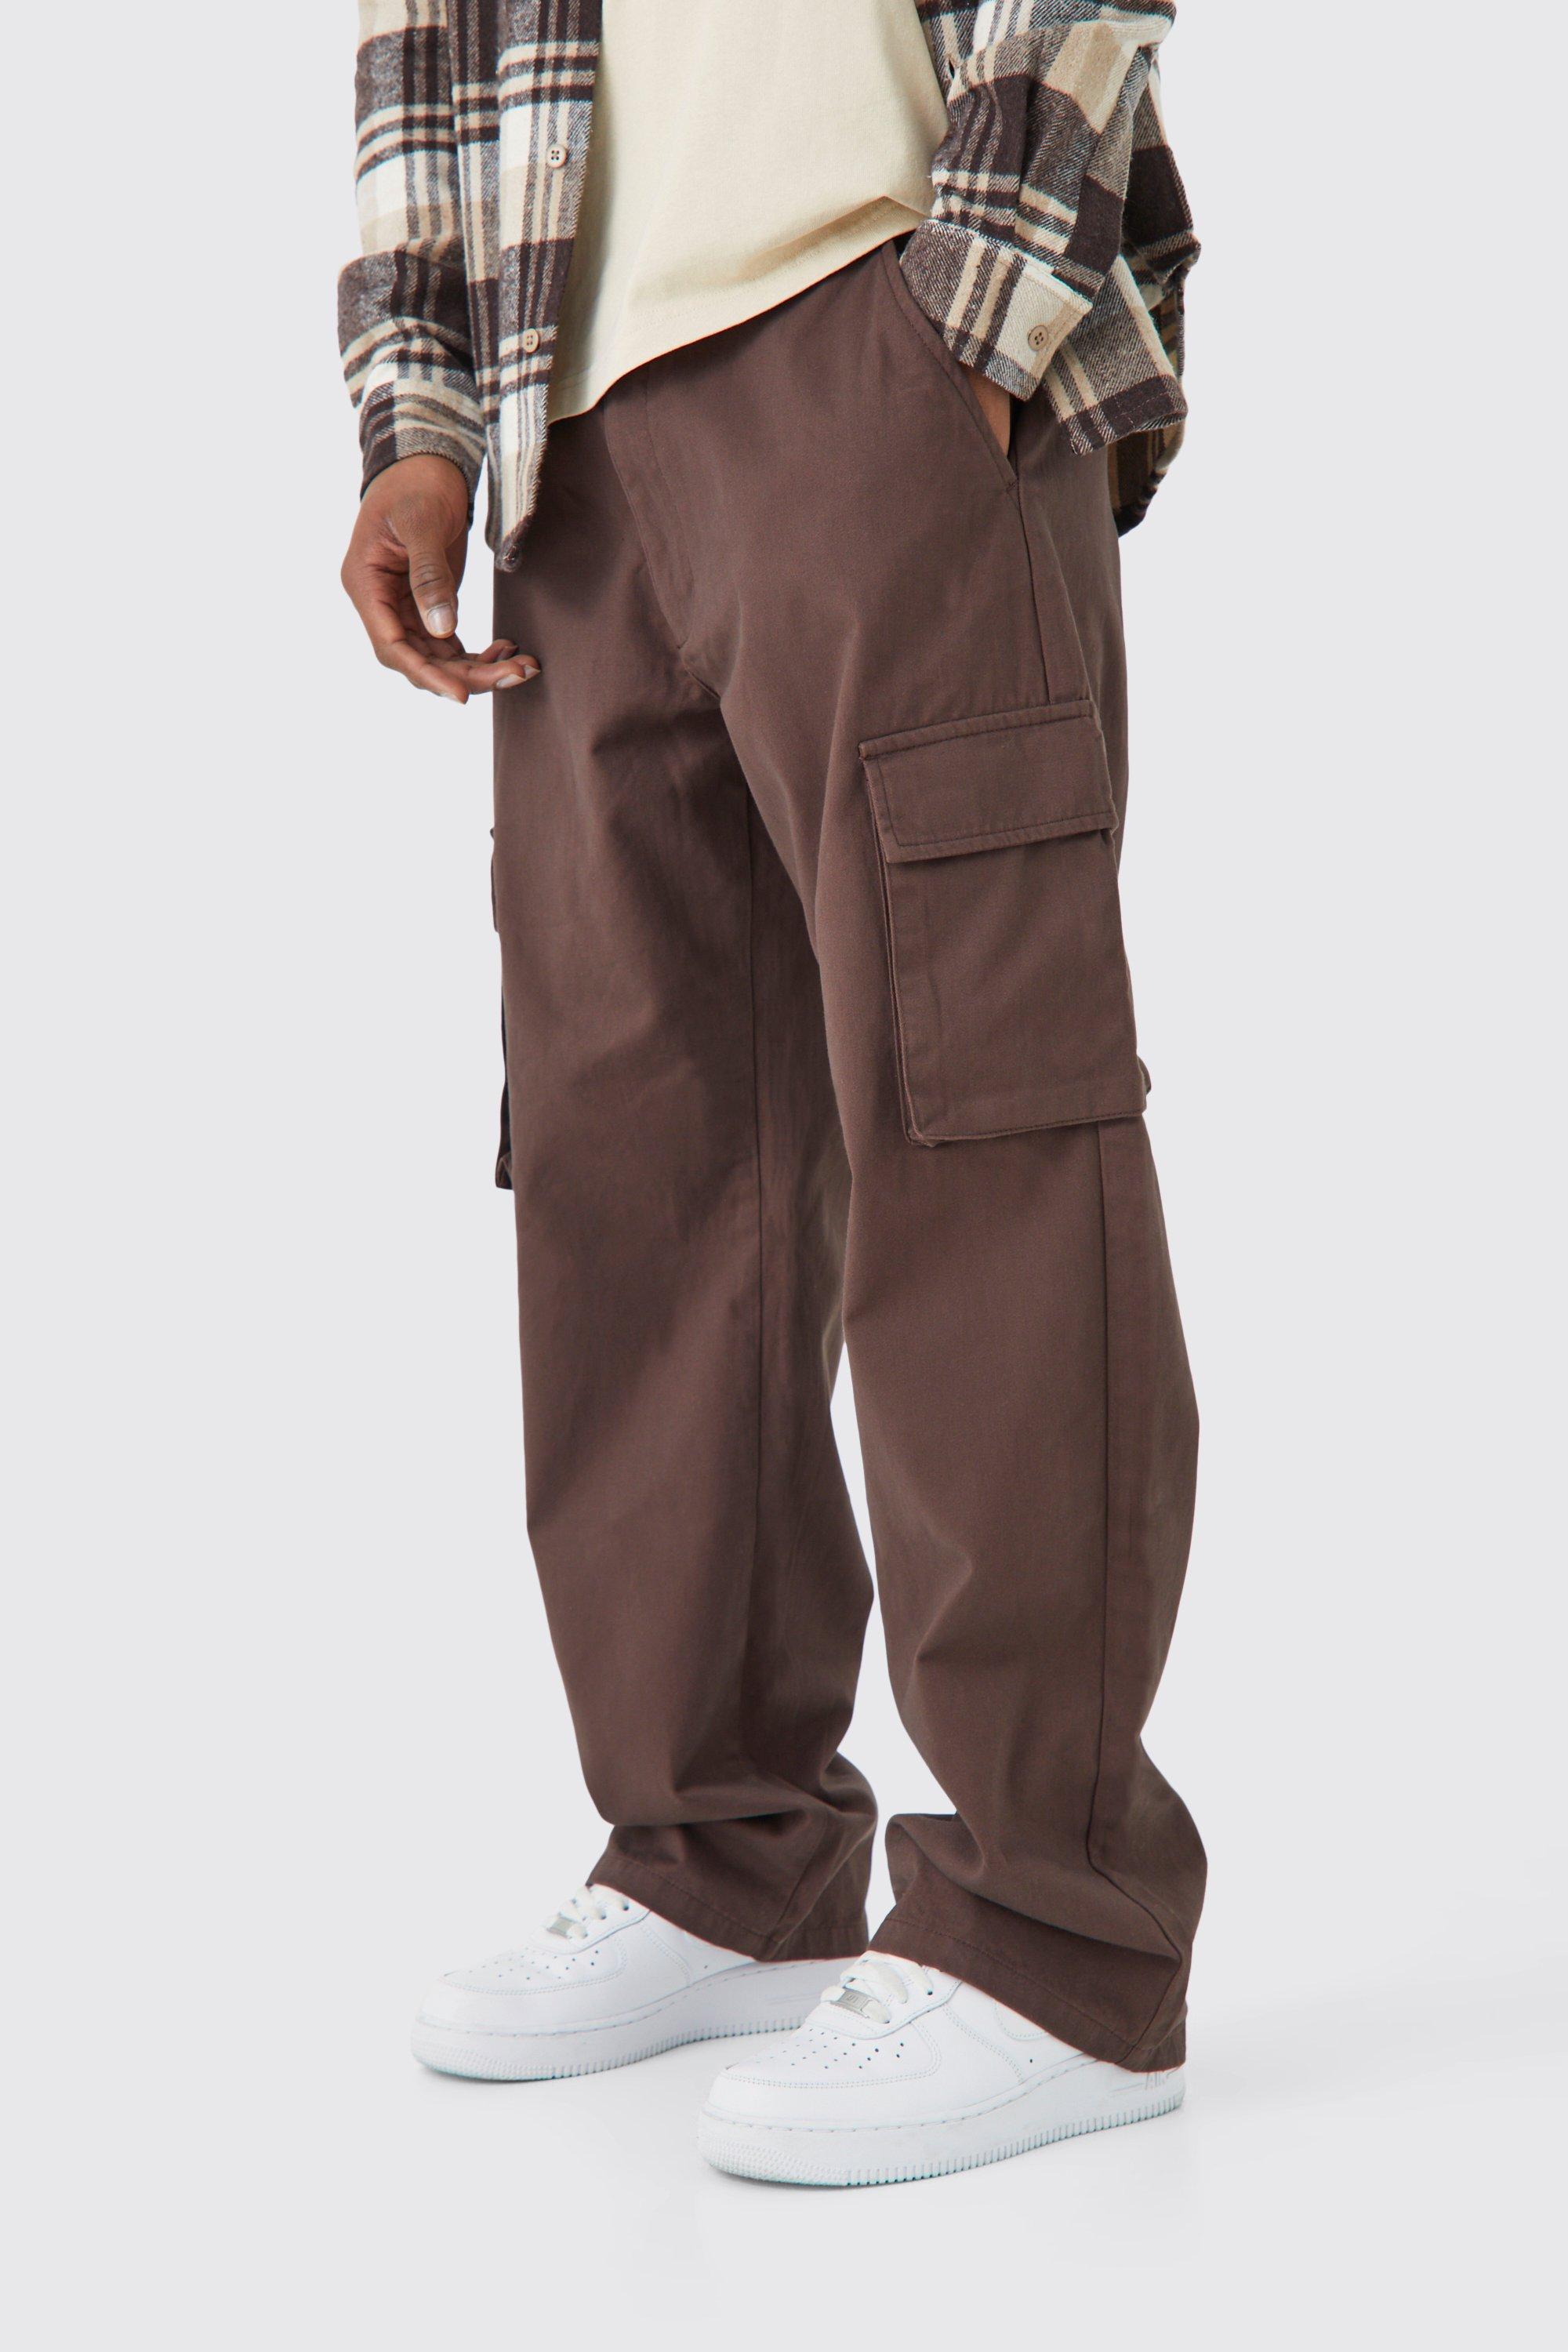 pantalon cargo large homme - brun - 28, brun